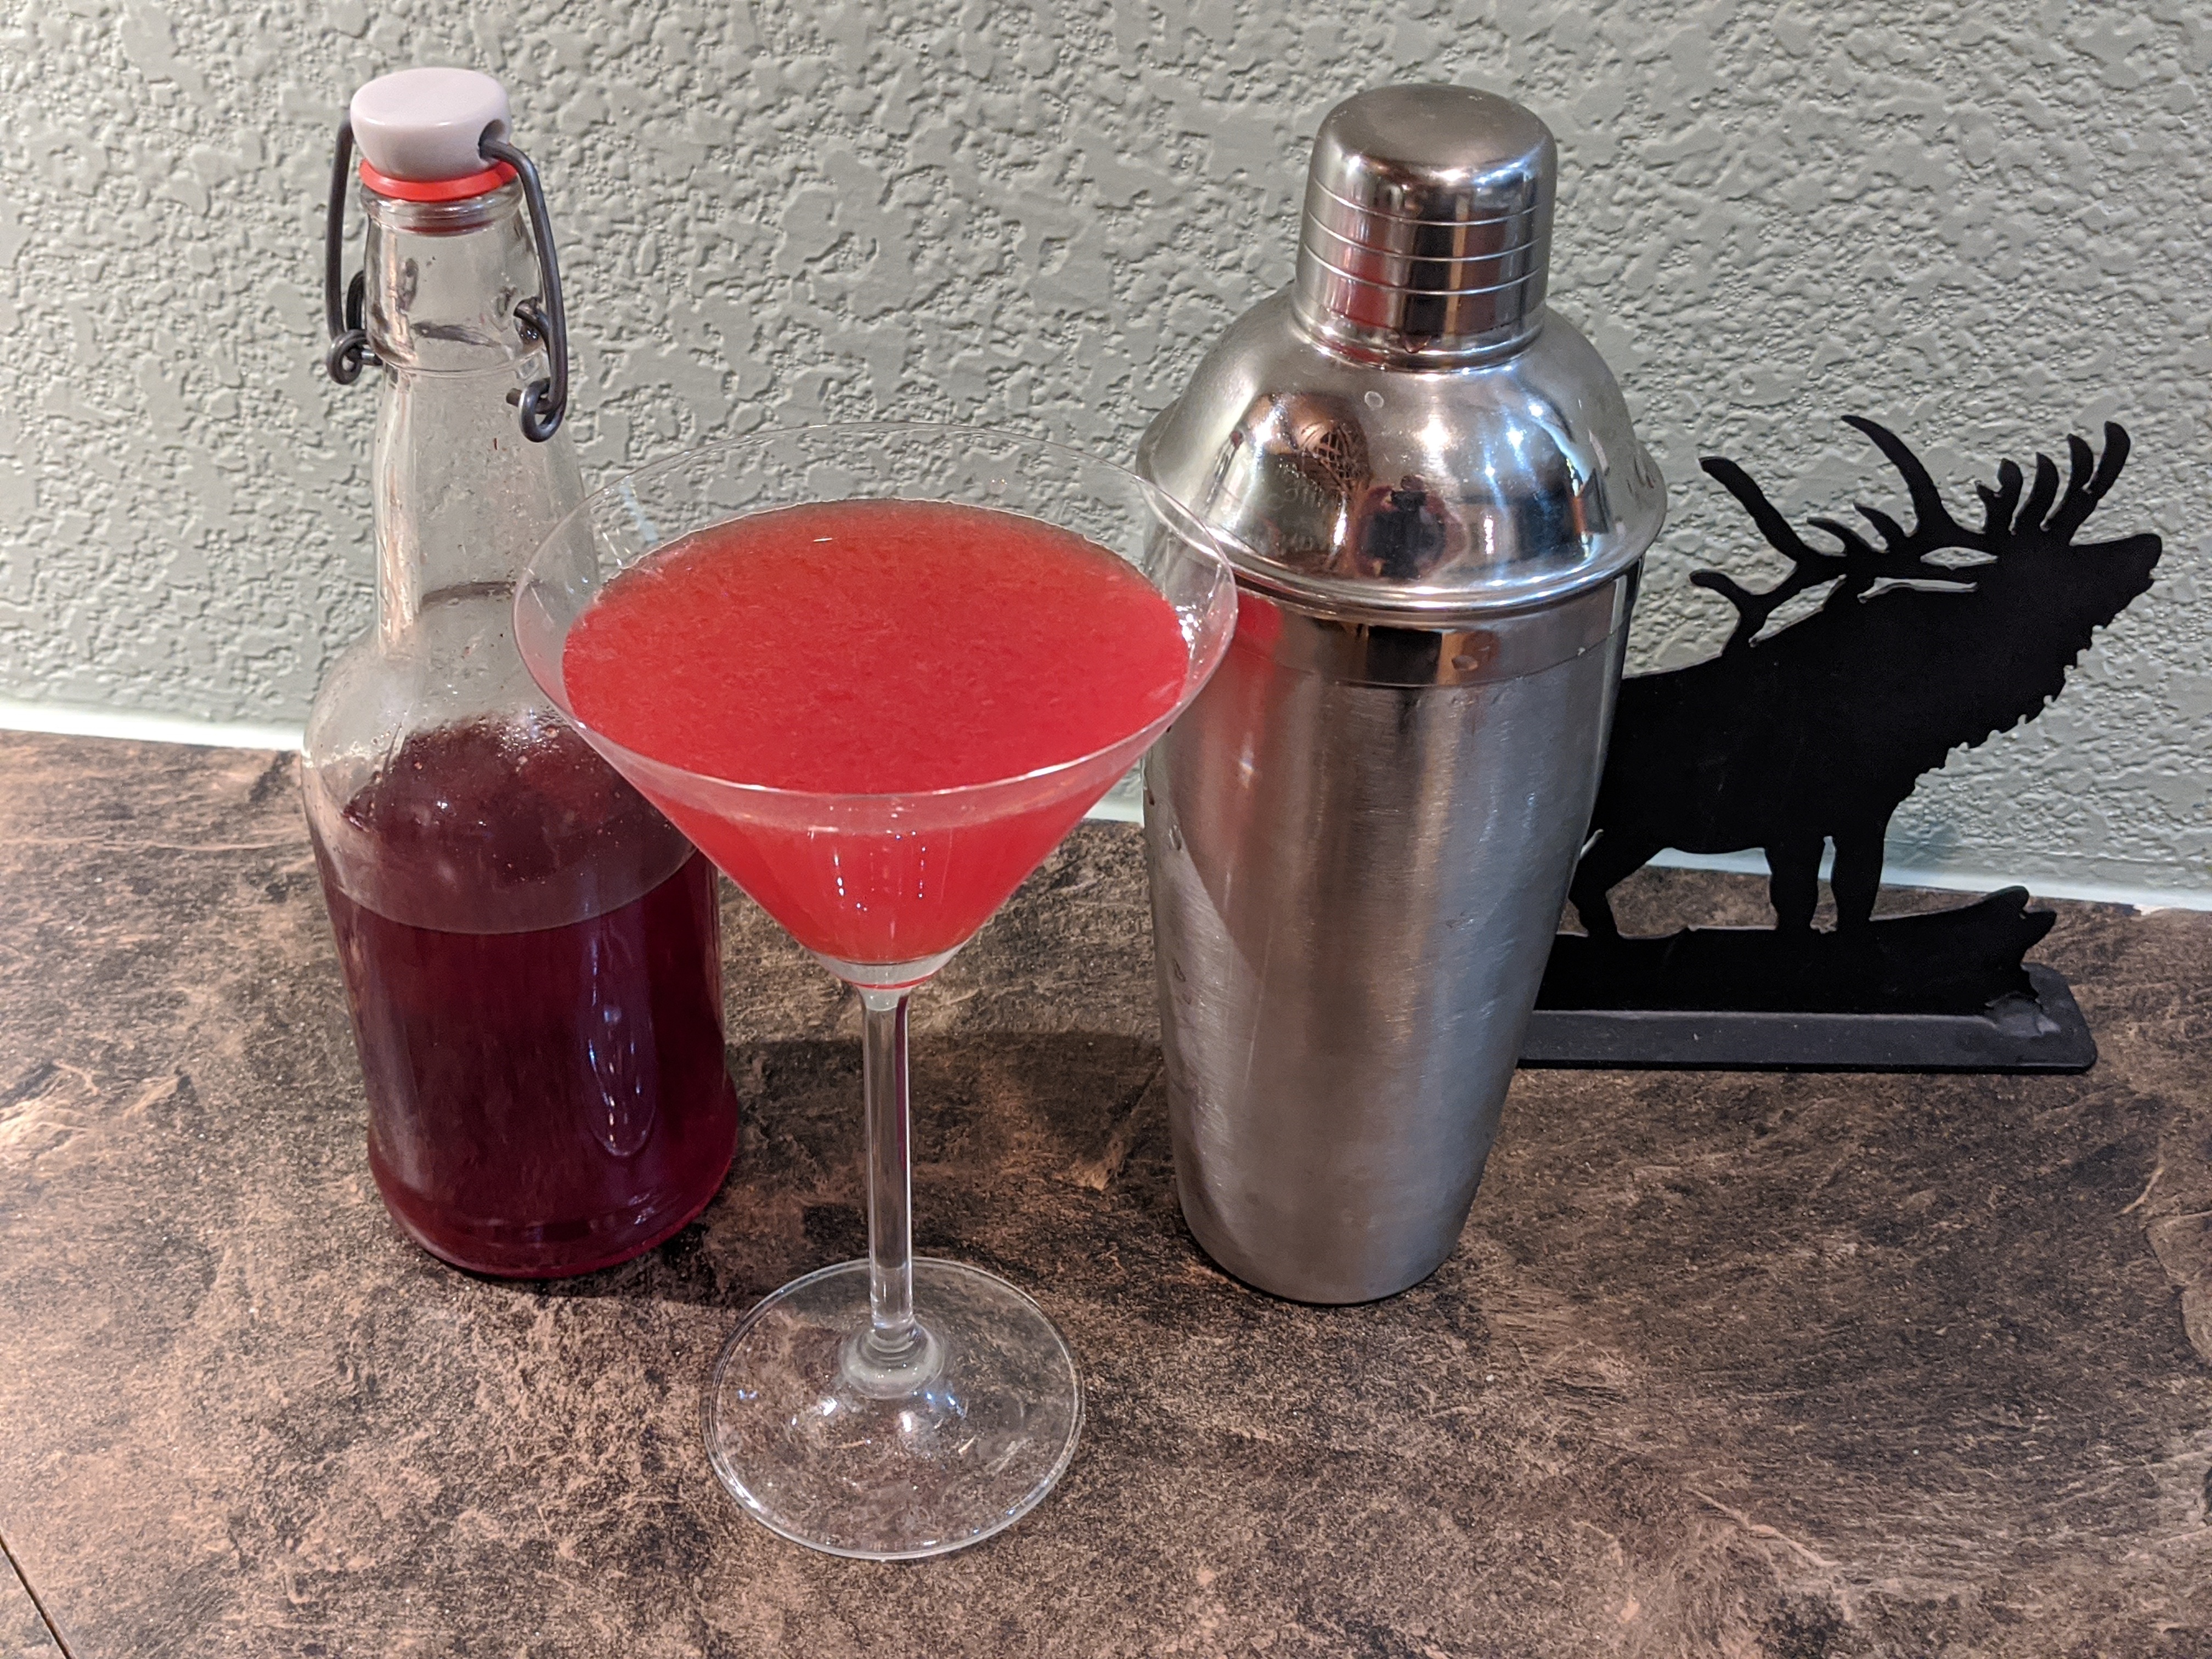 A Serviceberry and lemon vodka martini.